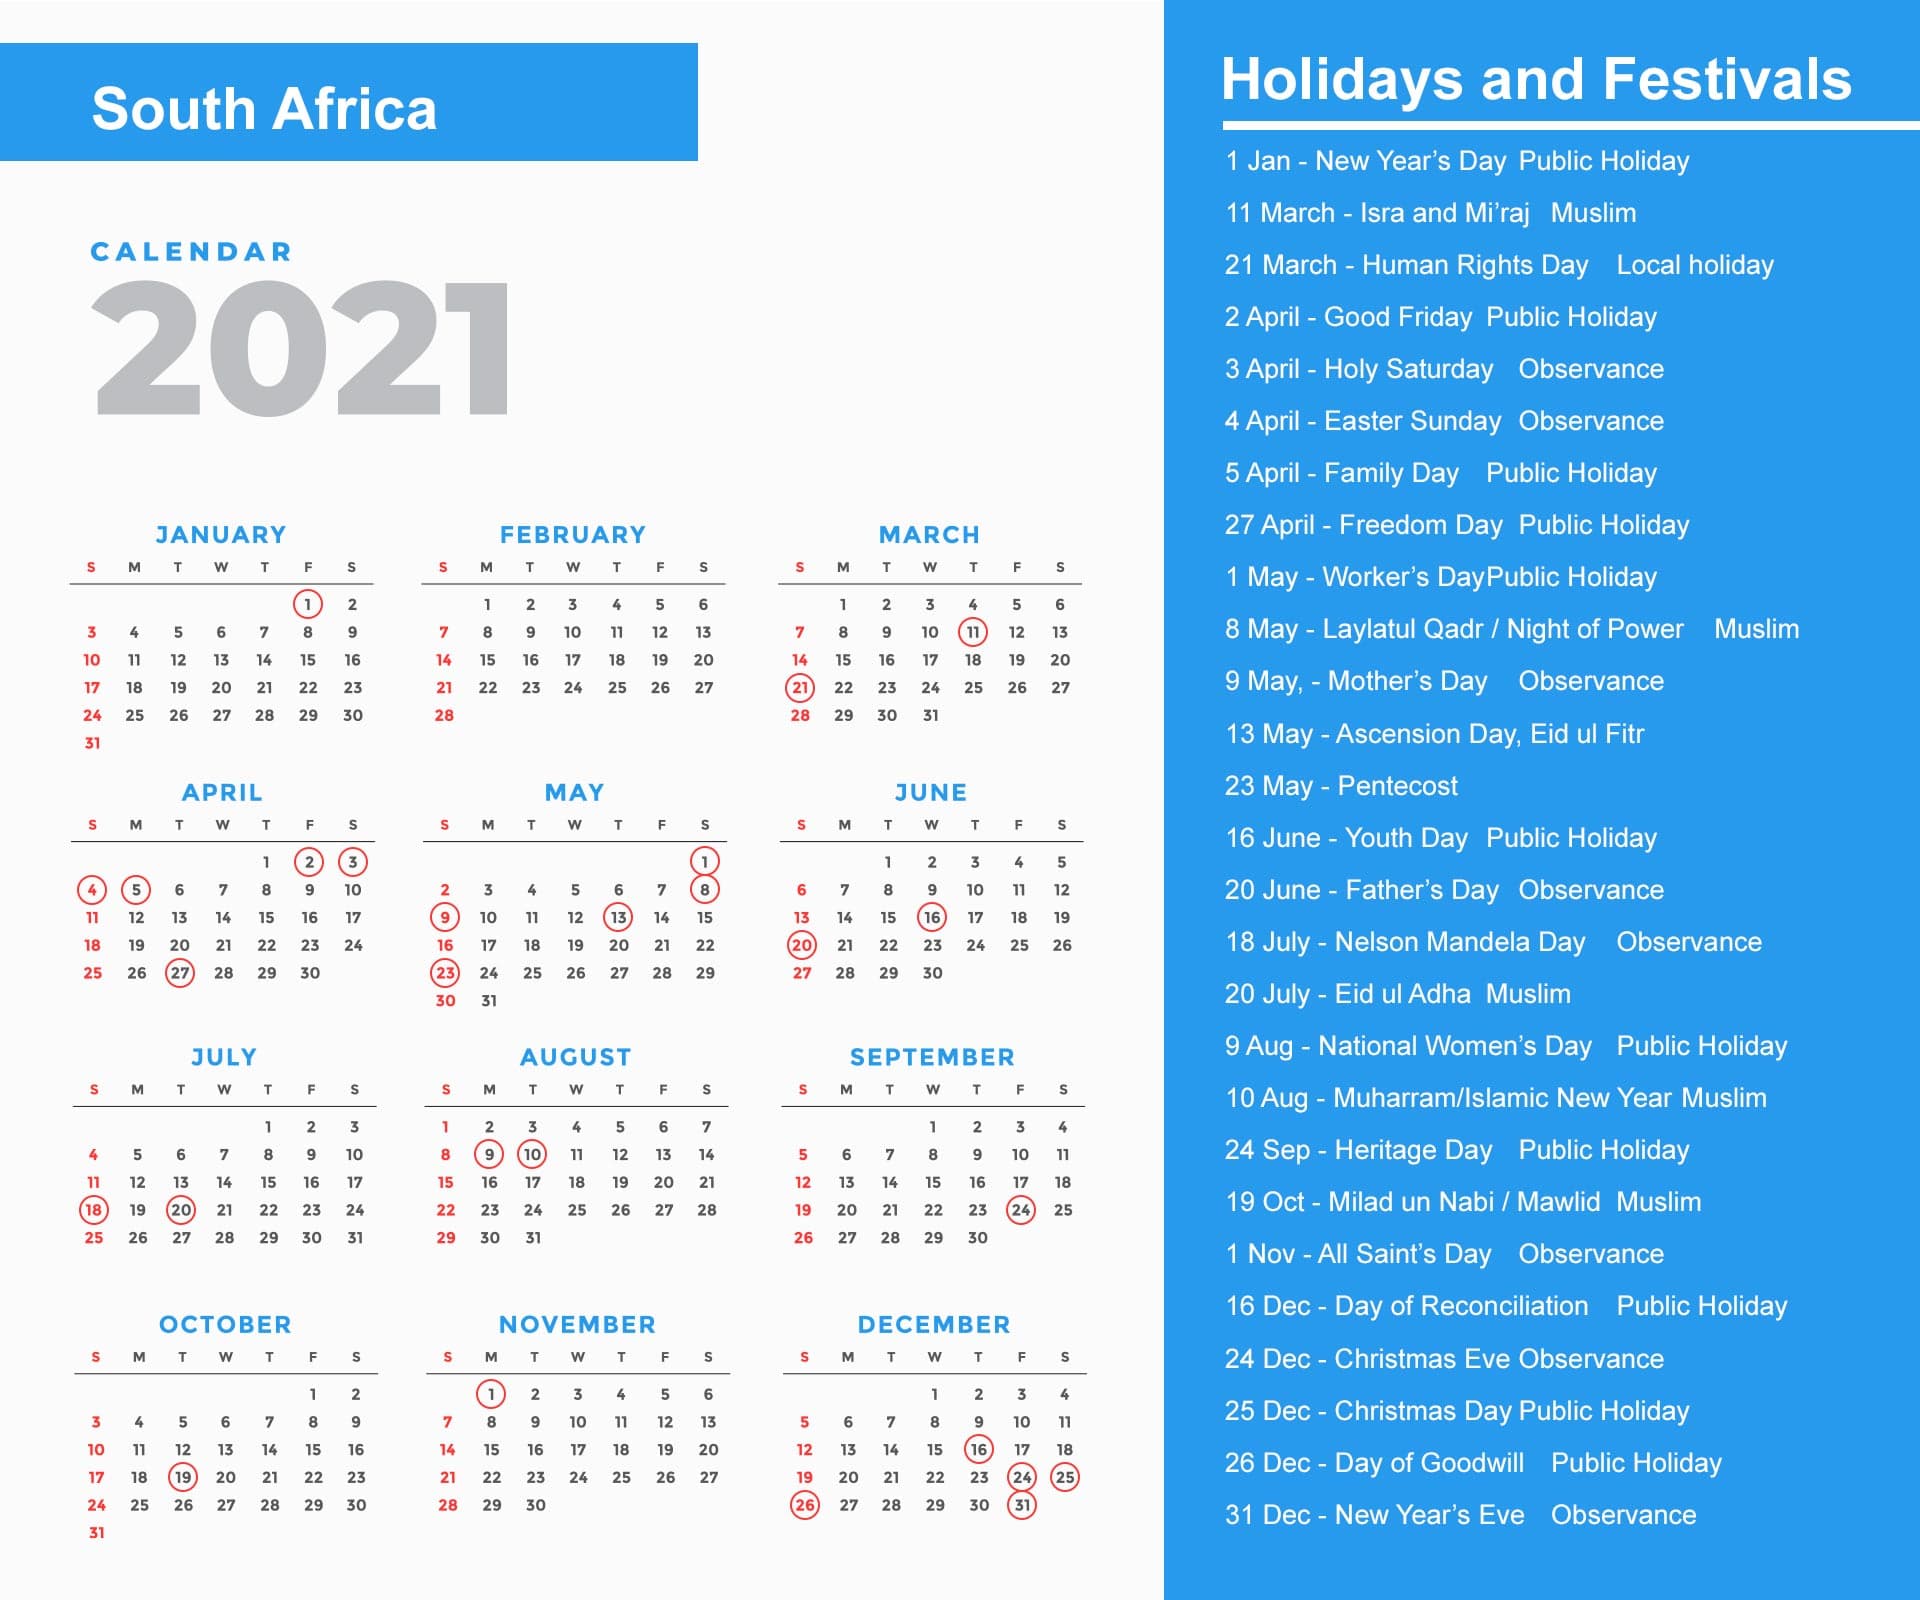 South Africa Holidays Calendar 2021